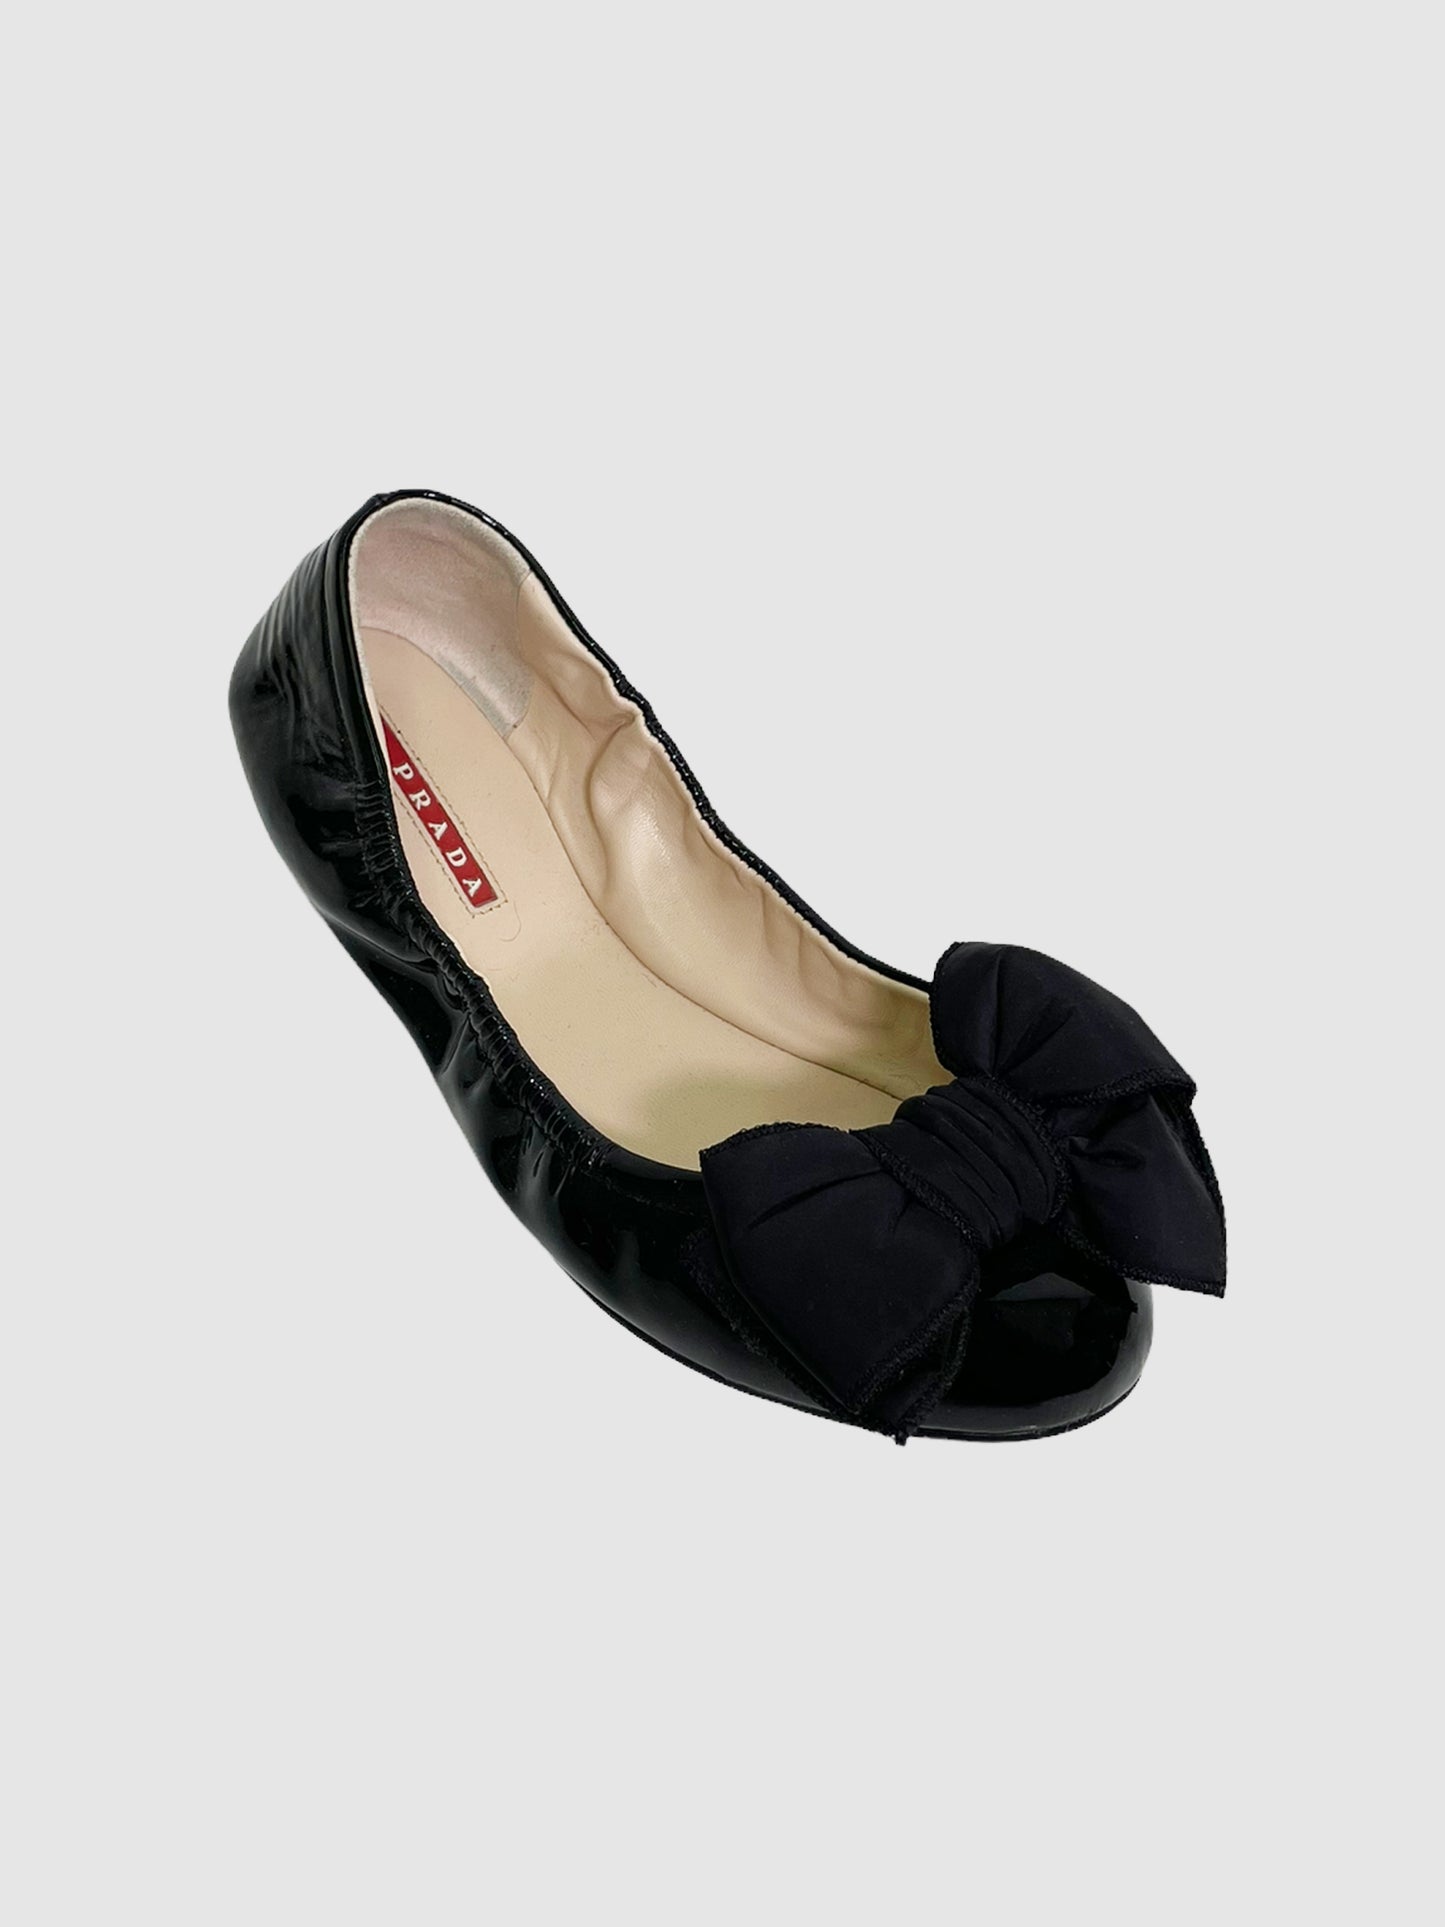 Prada Black Patent Leather w/ Bow Flats - Size 38.5